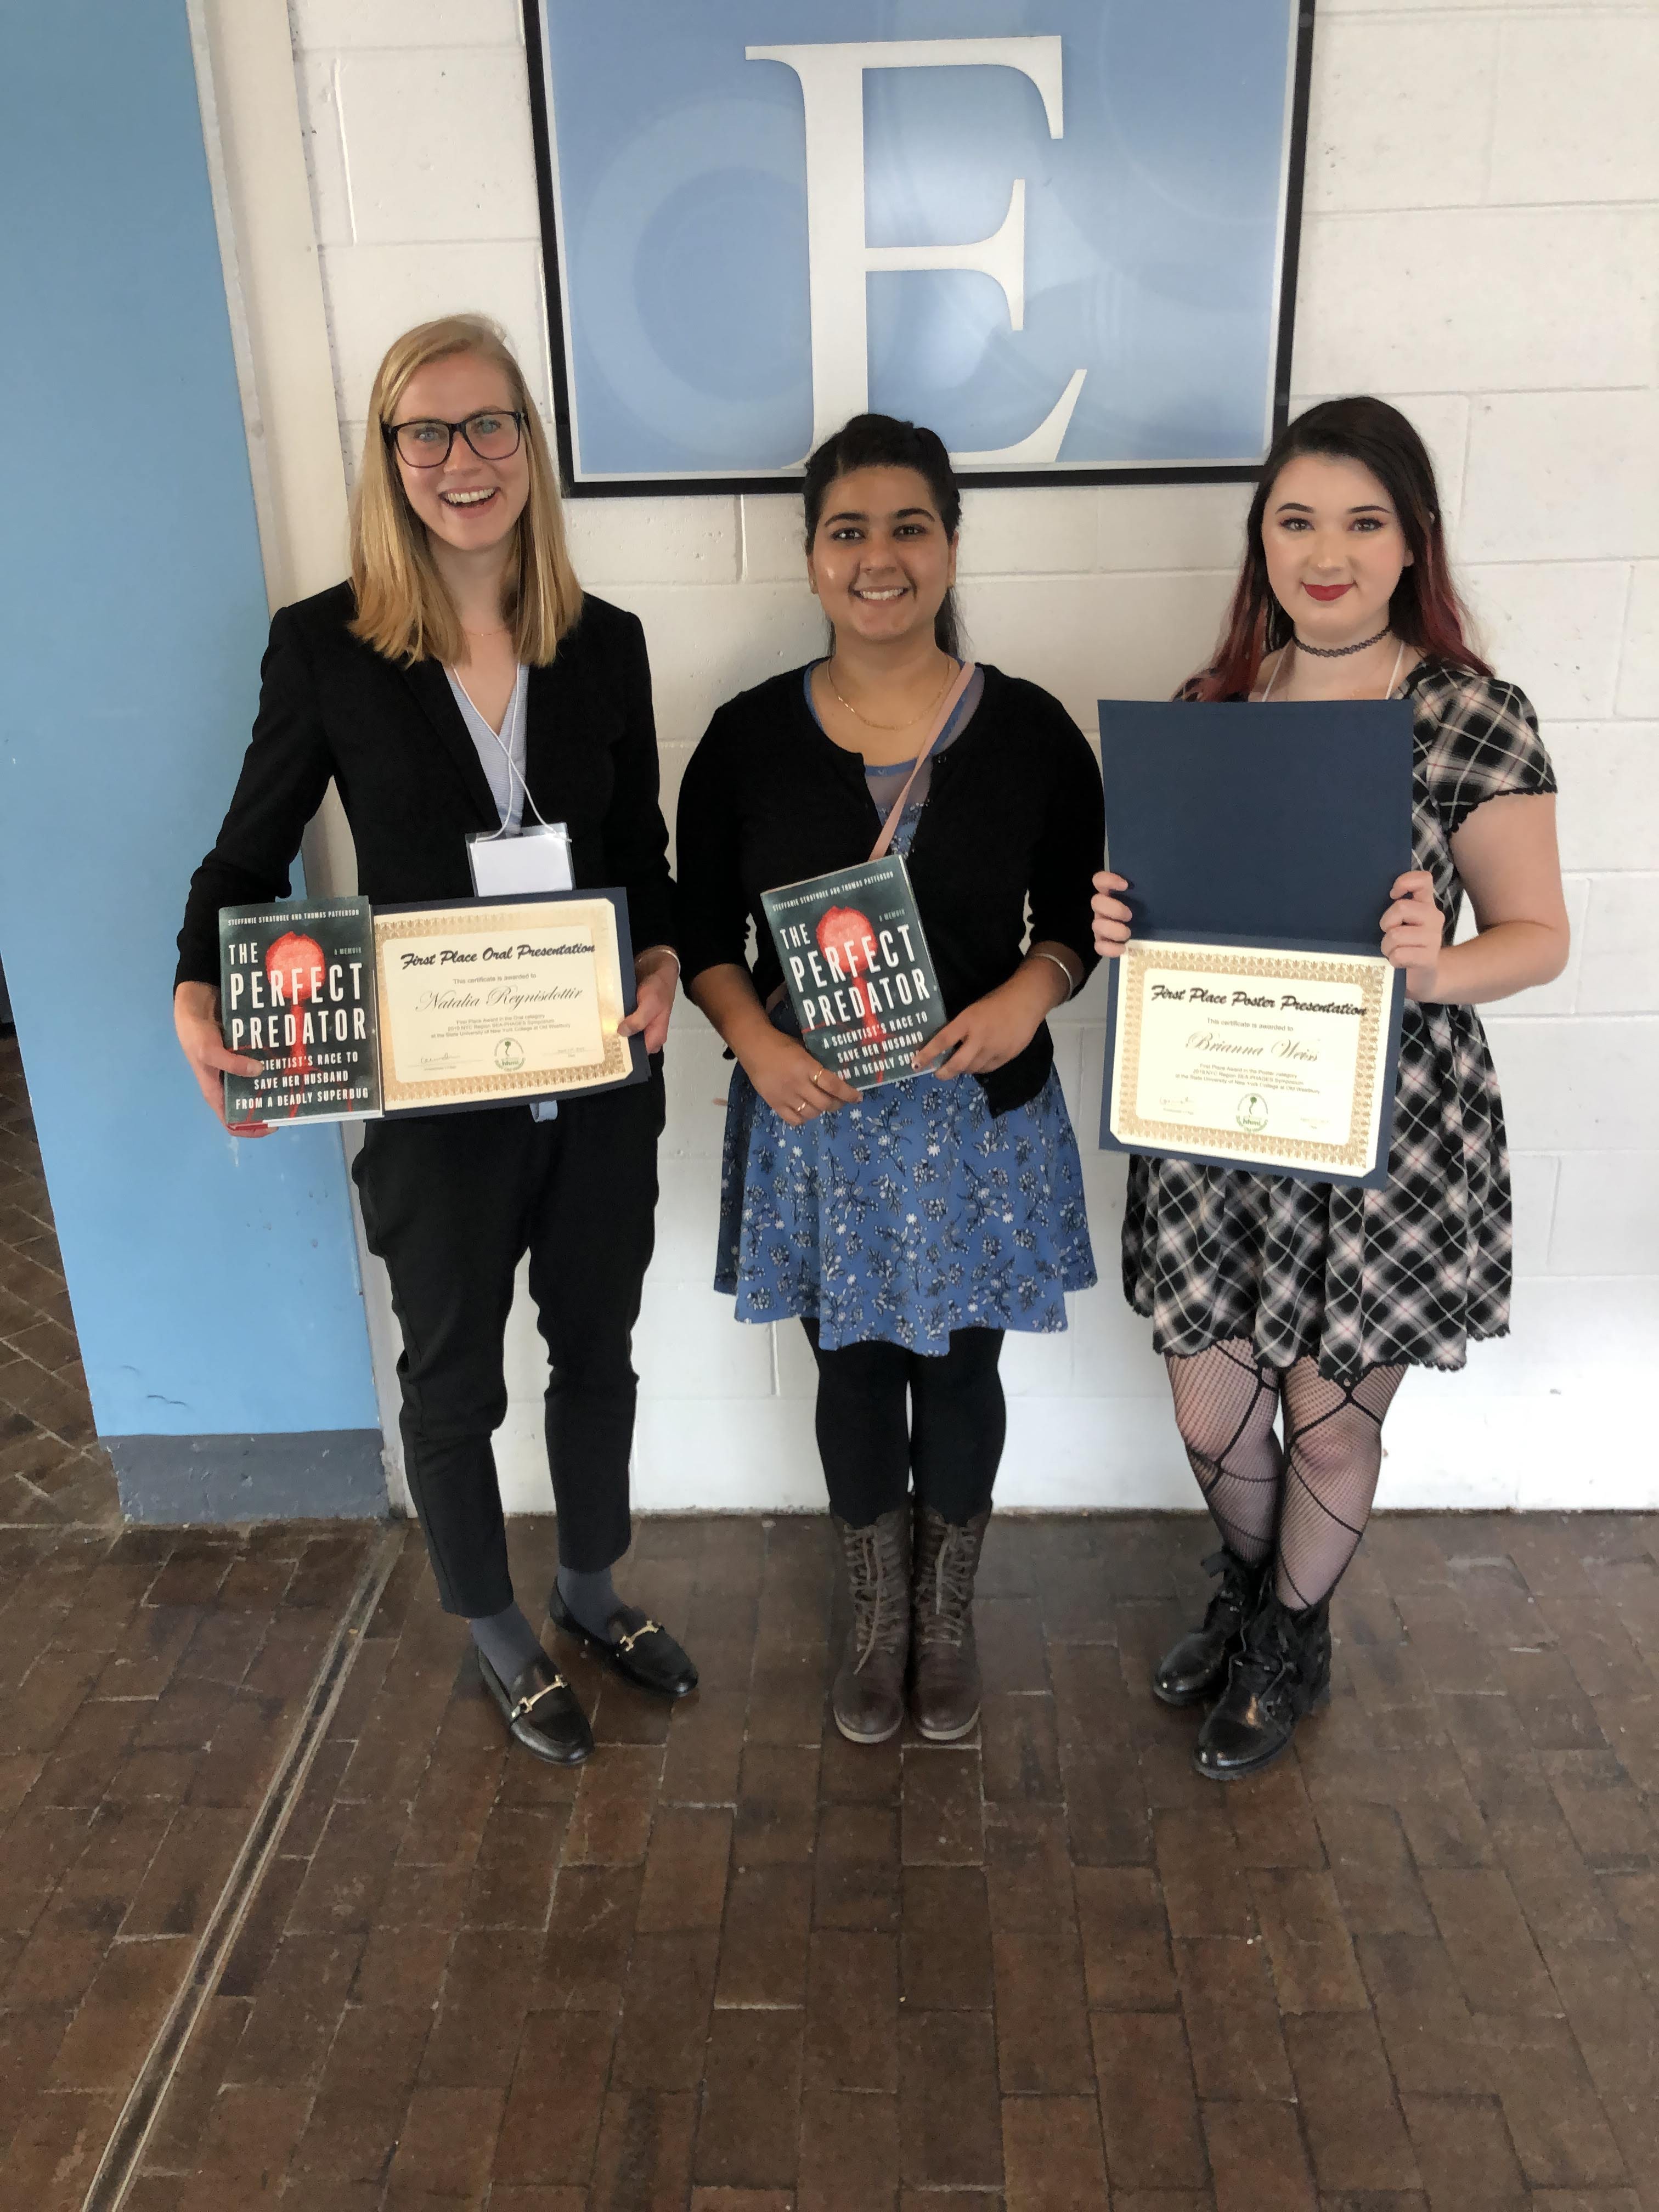 NYIT Life Science students, Natalia Reynisdottir, Lovejit Kaur and Brianna Weiss with their awards